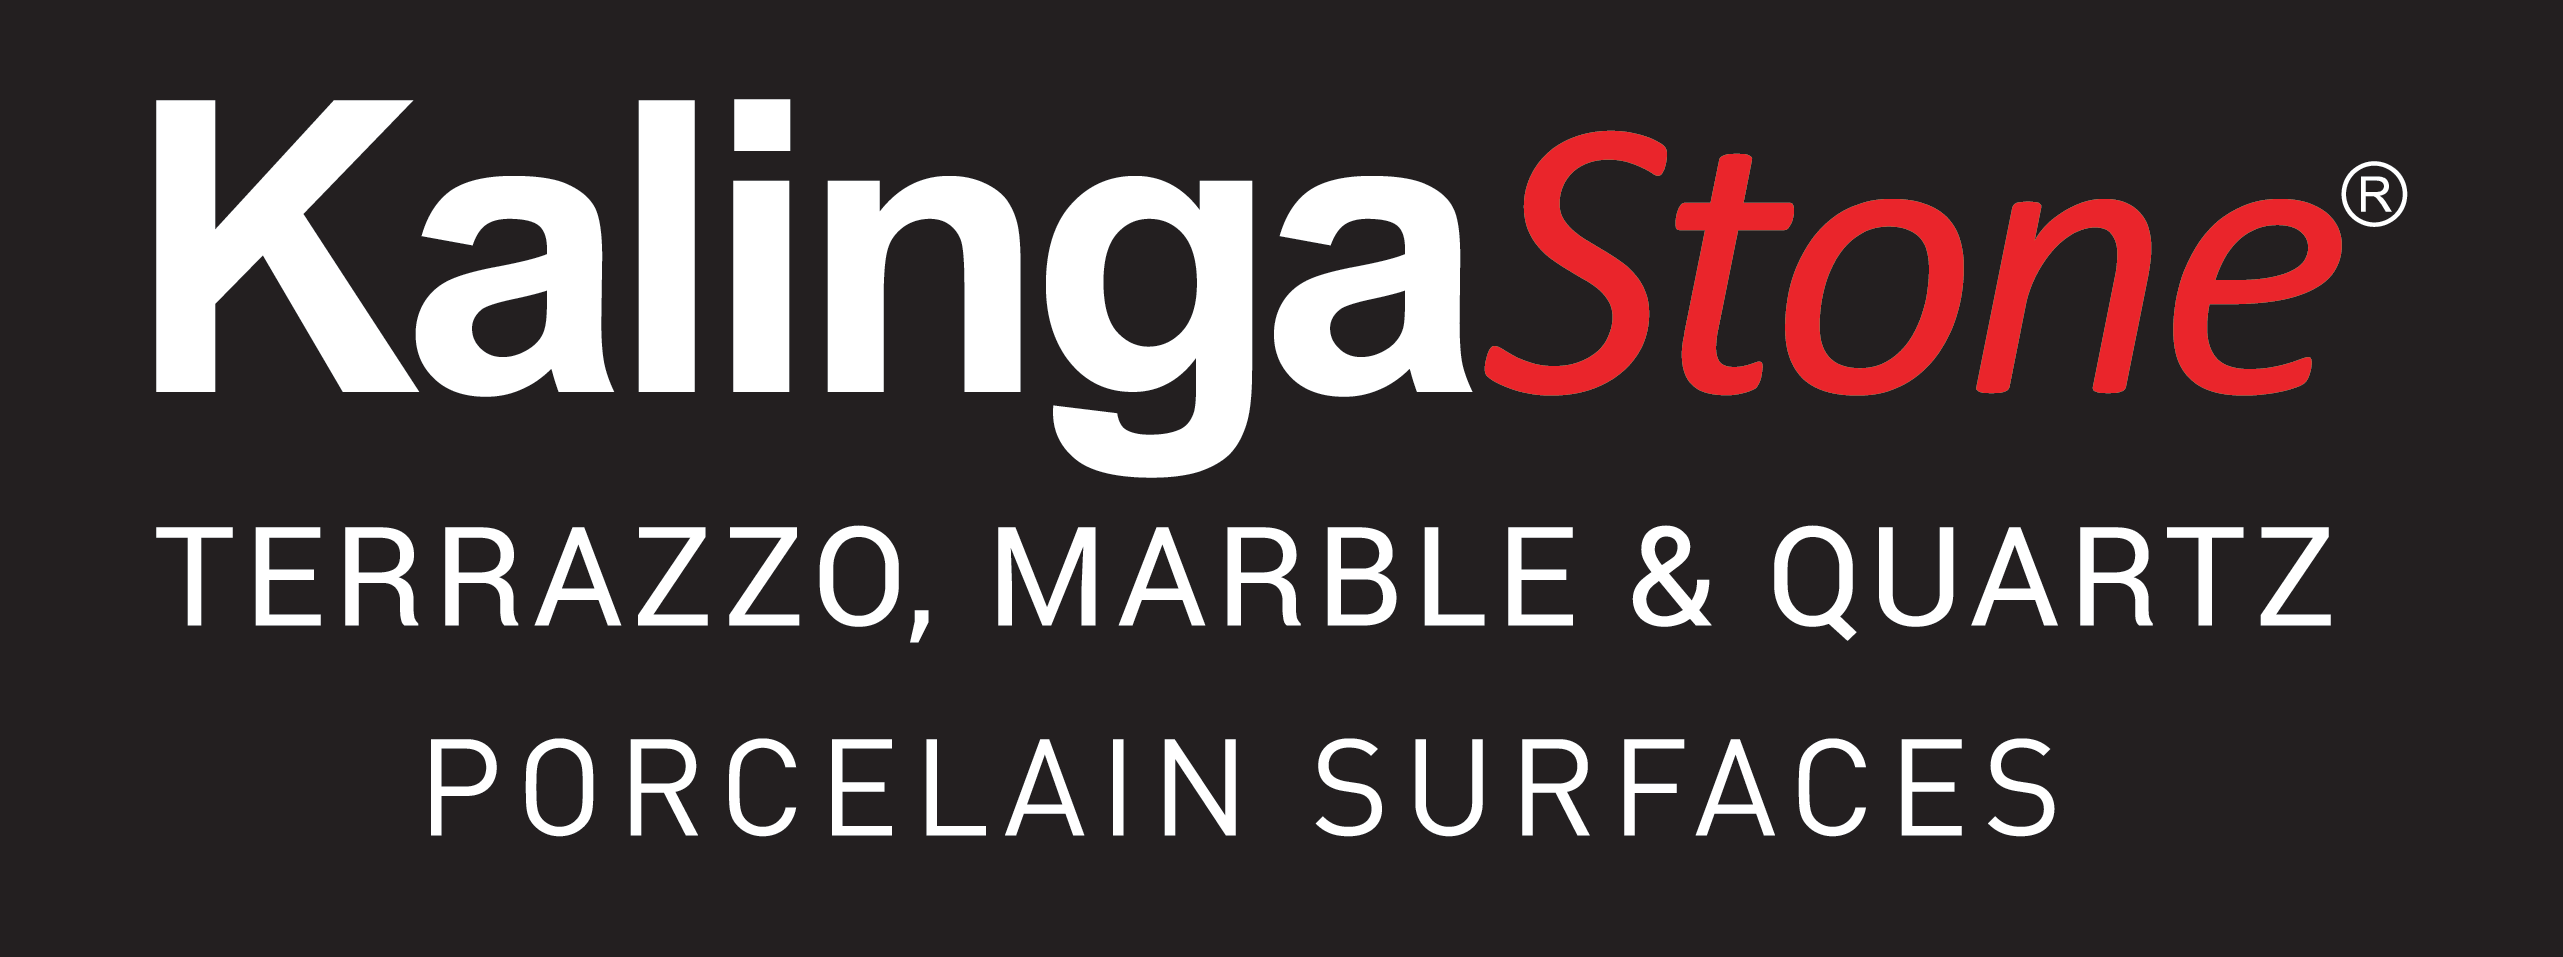 KalingaStone Logo